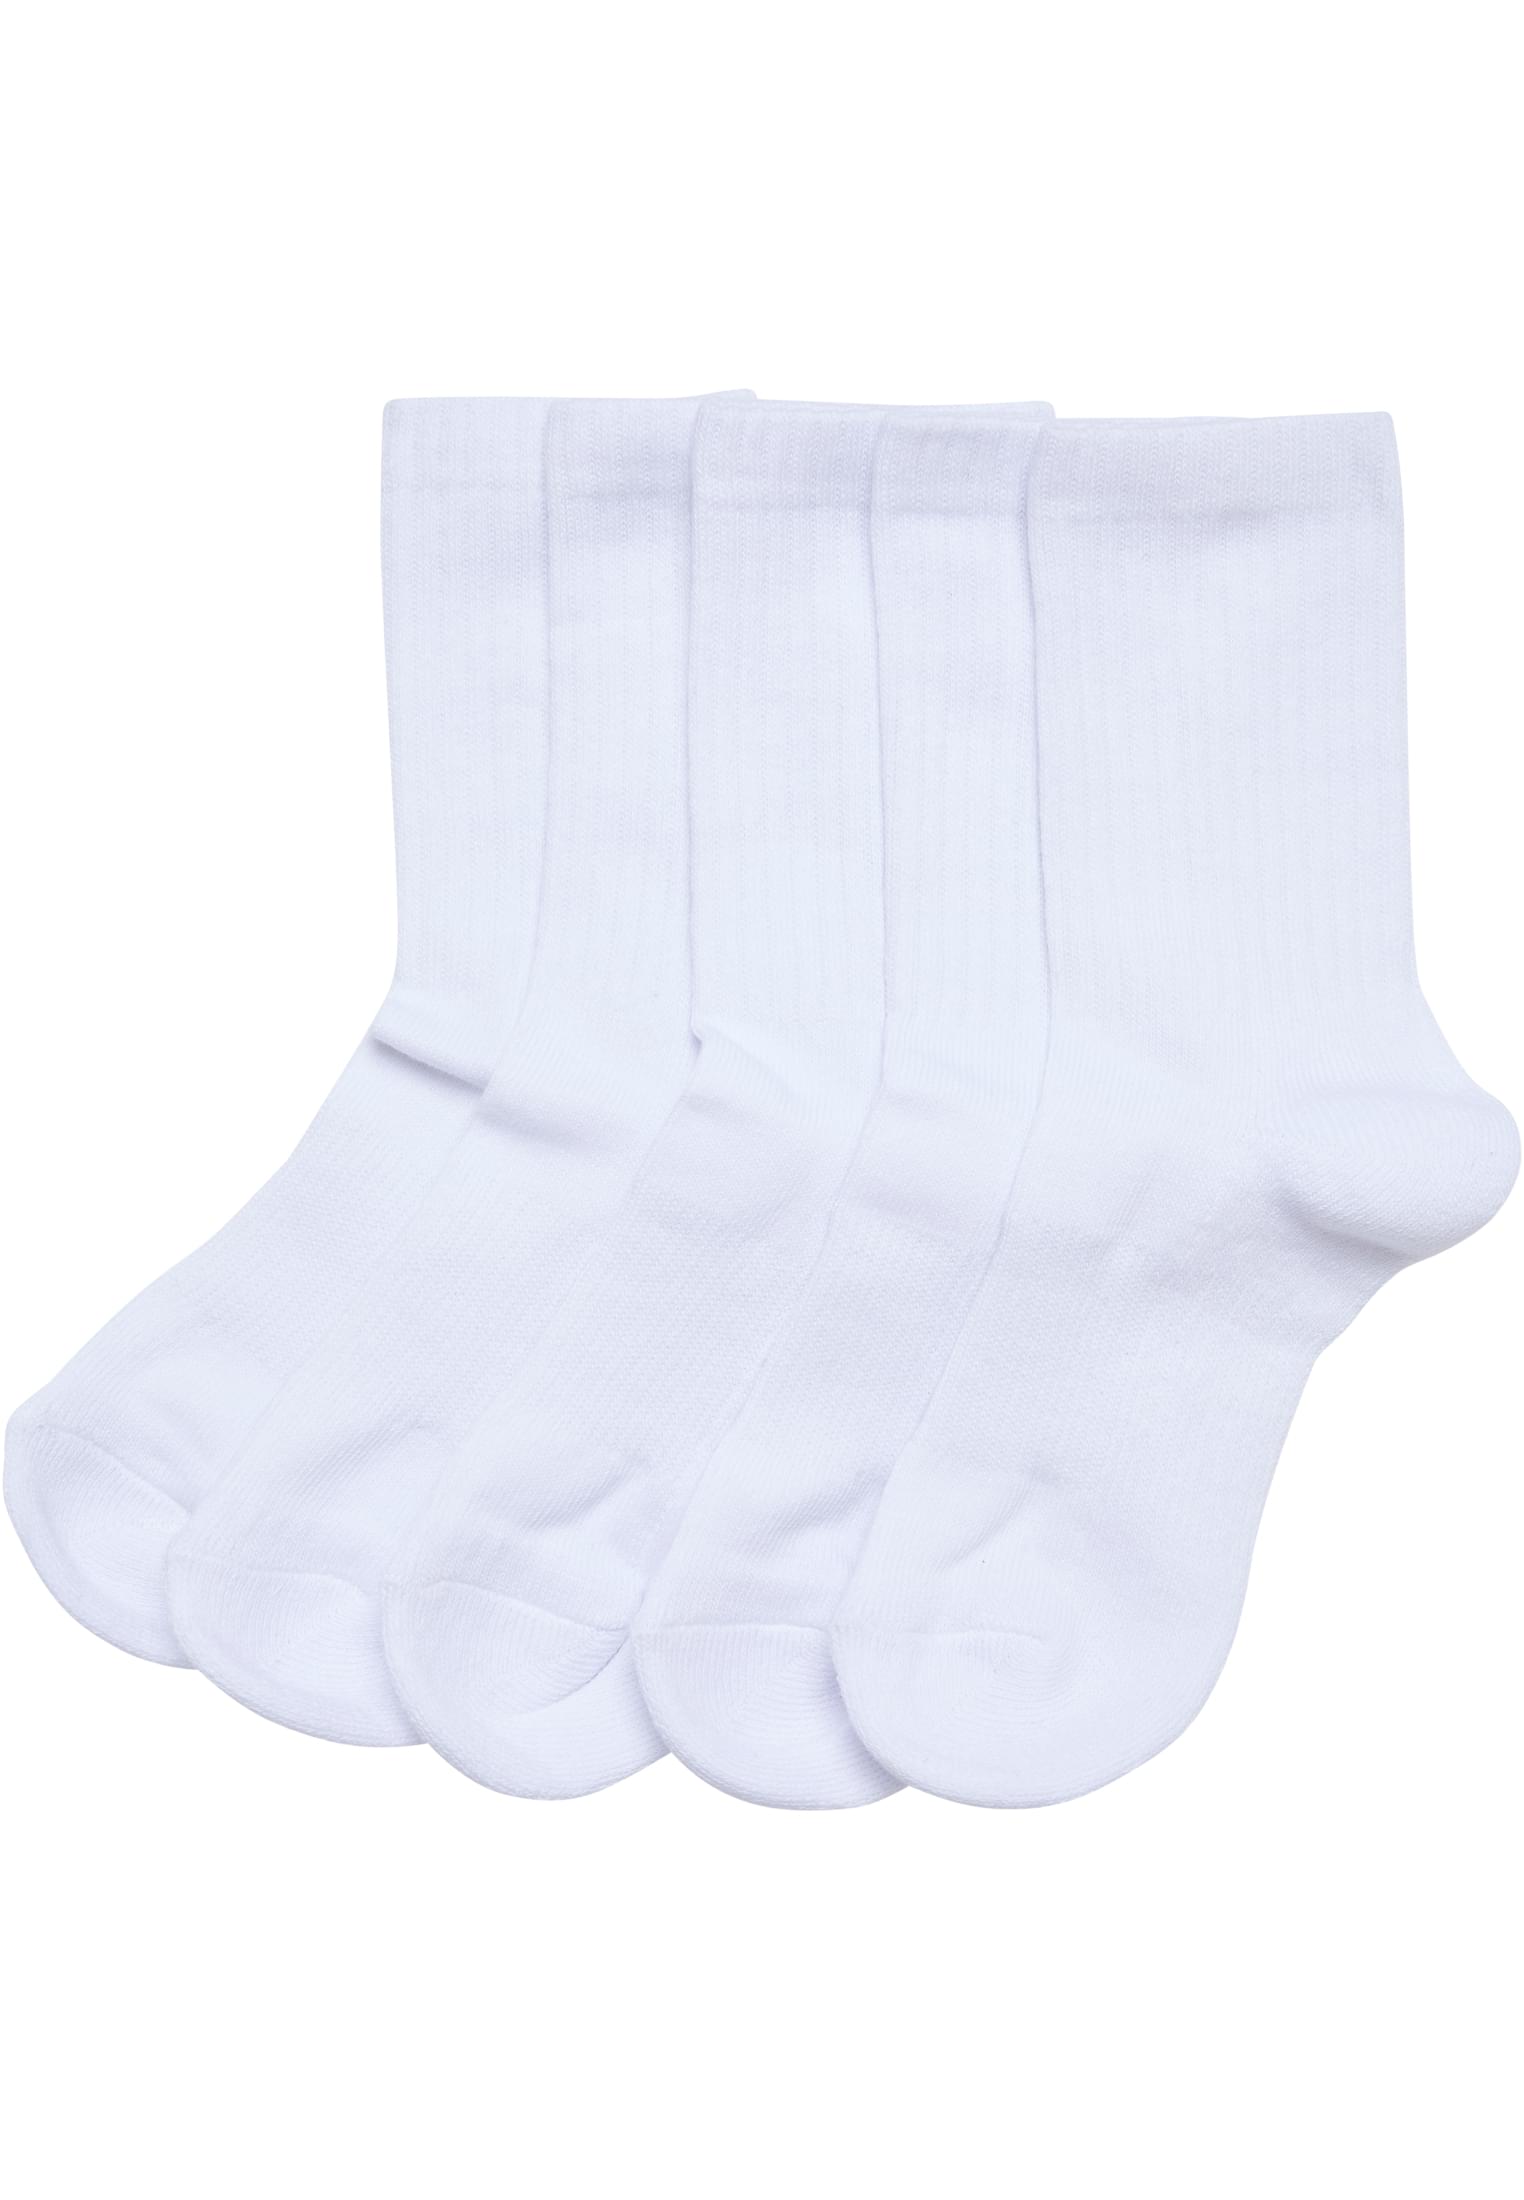 Children's Sports Socks 5-Pack White